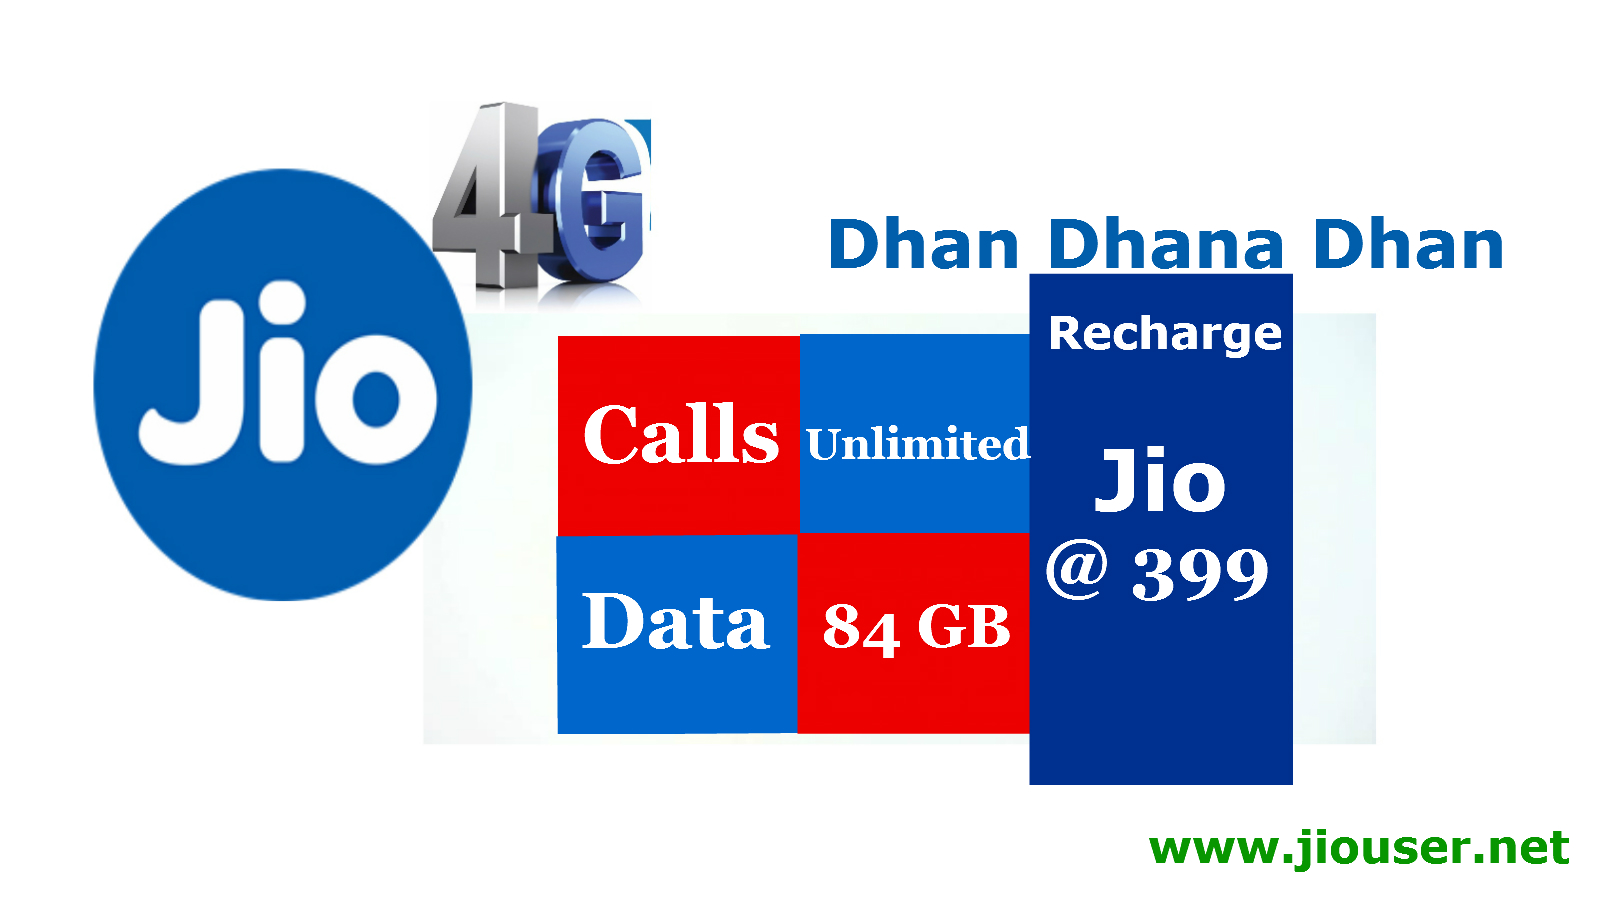 Jio dhan dhana dhan recharge online 399 plan details